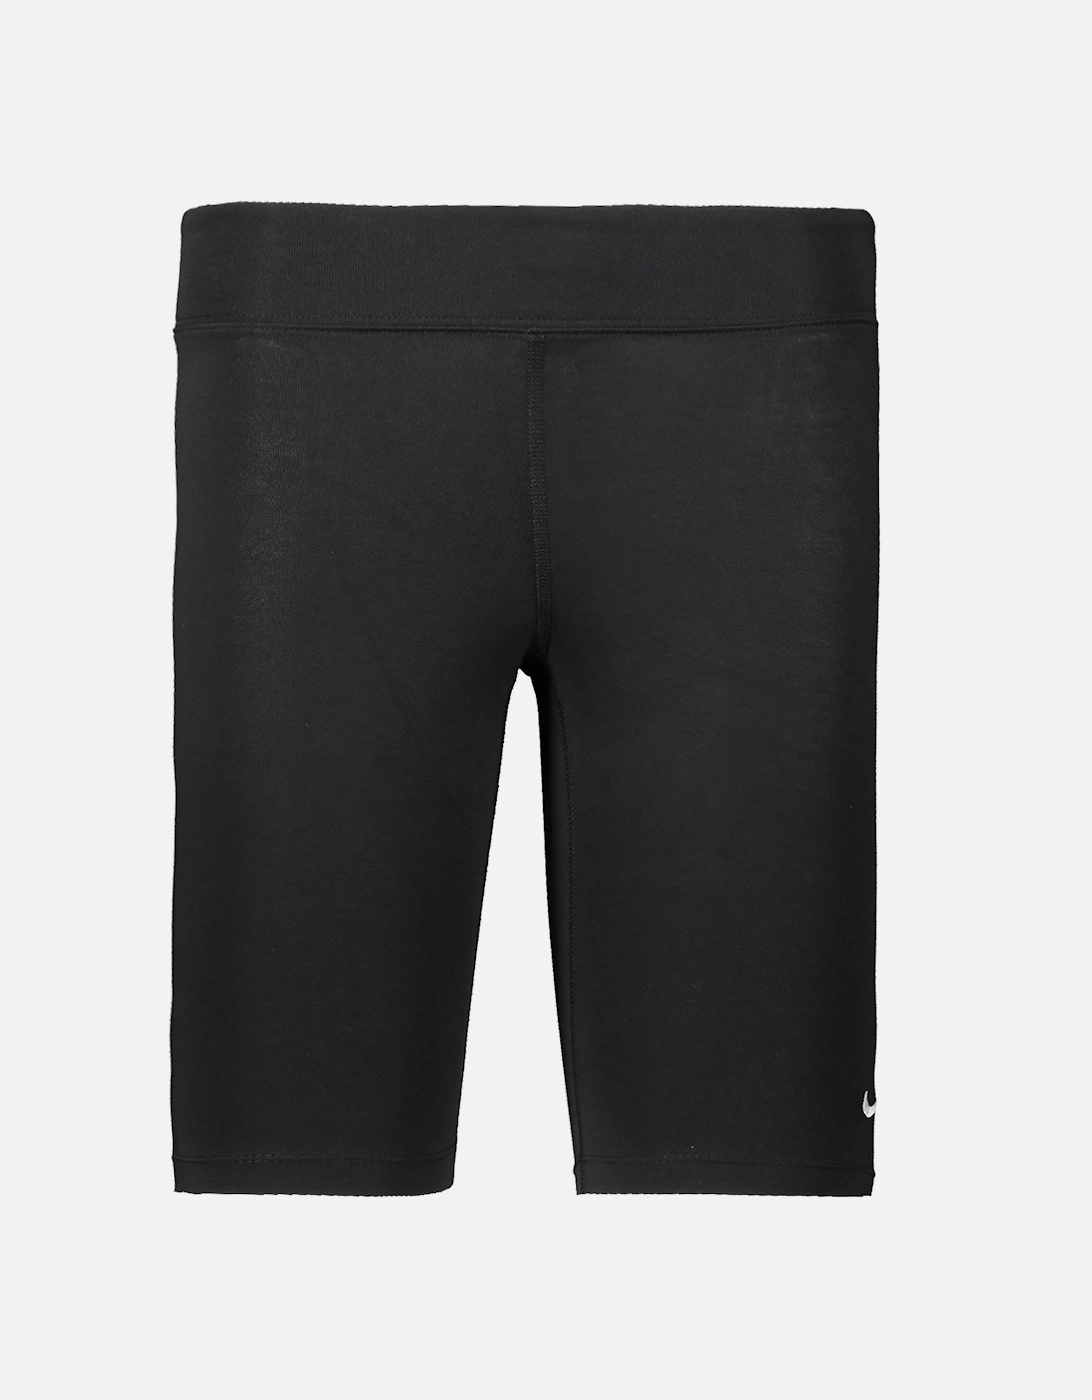 NSW Bike Shorts - Black, 7 of 6